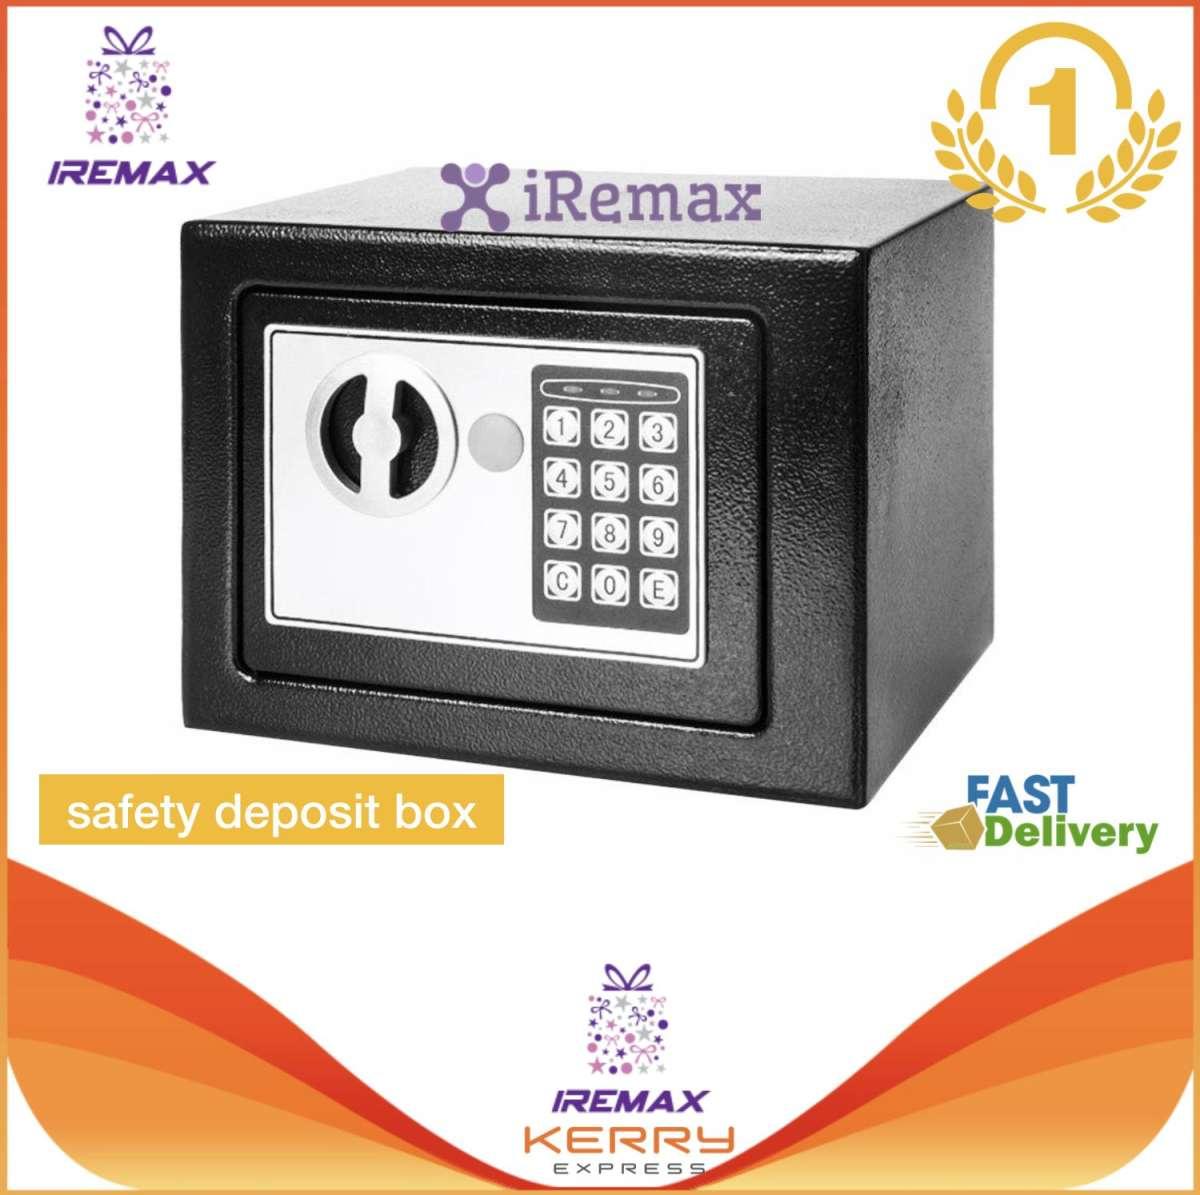 iRemax ตู้เซฟ ตู้เซฟนิรภัย ตู้เซฟออมสิน ตู้เซฟเก็บเงิน รุ่นใหม่ ตู้เซฟอิเล็กทรอนิกส์ safety box safety deposit box ตู้เซฟนิรภัย (Size : 23 x 17 x 17 cm.)